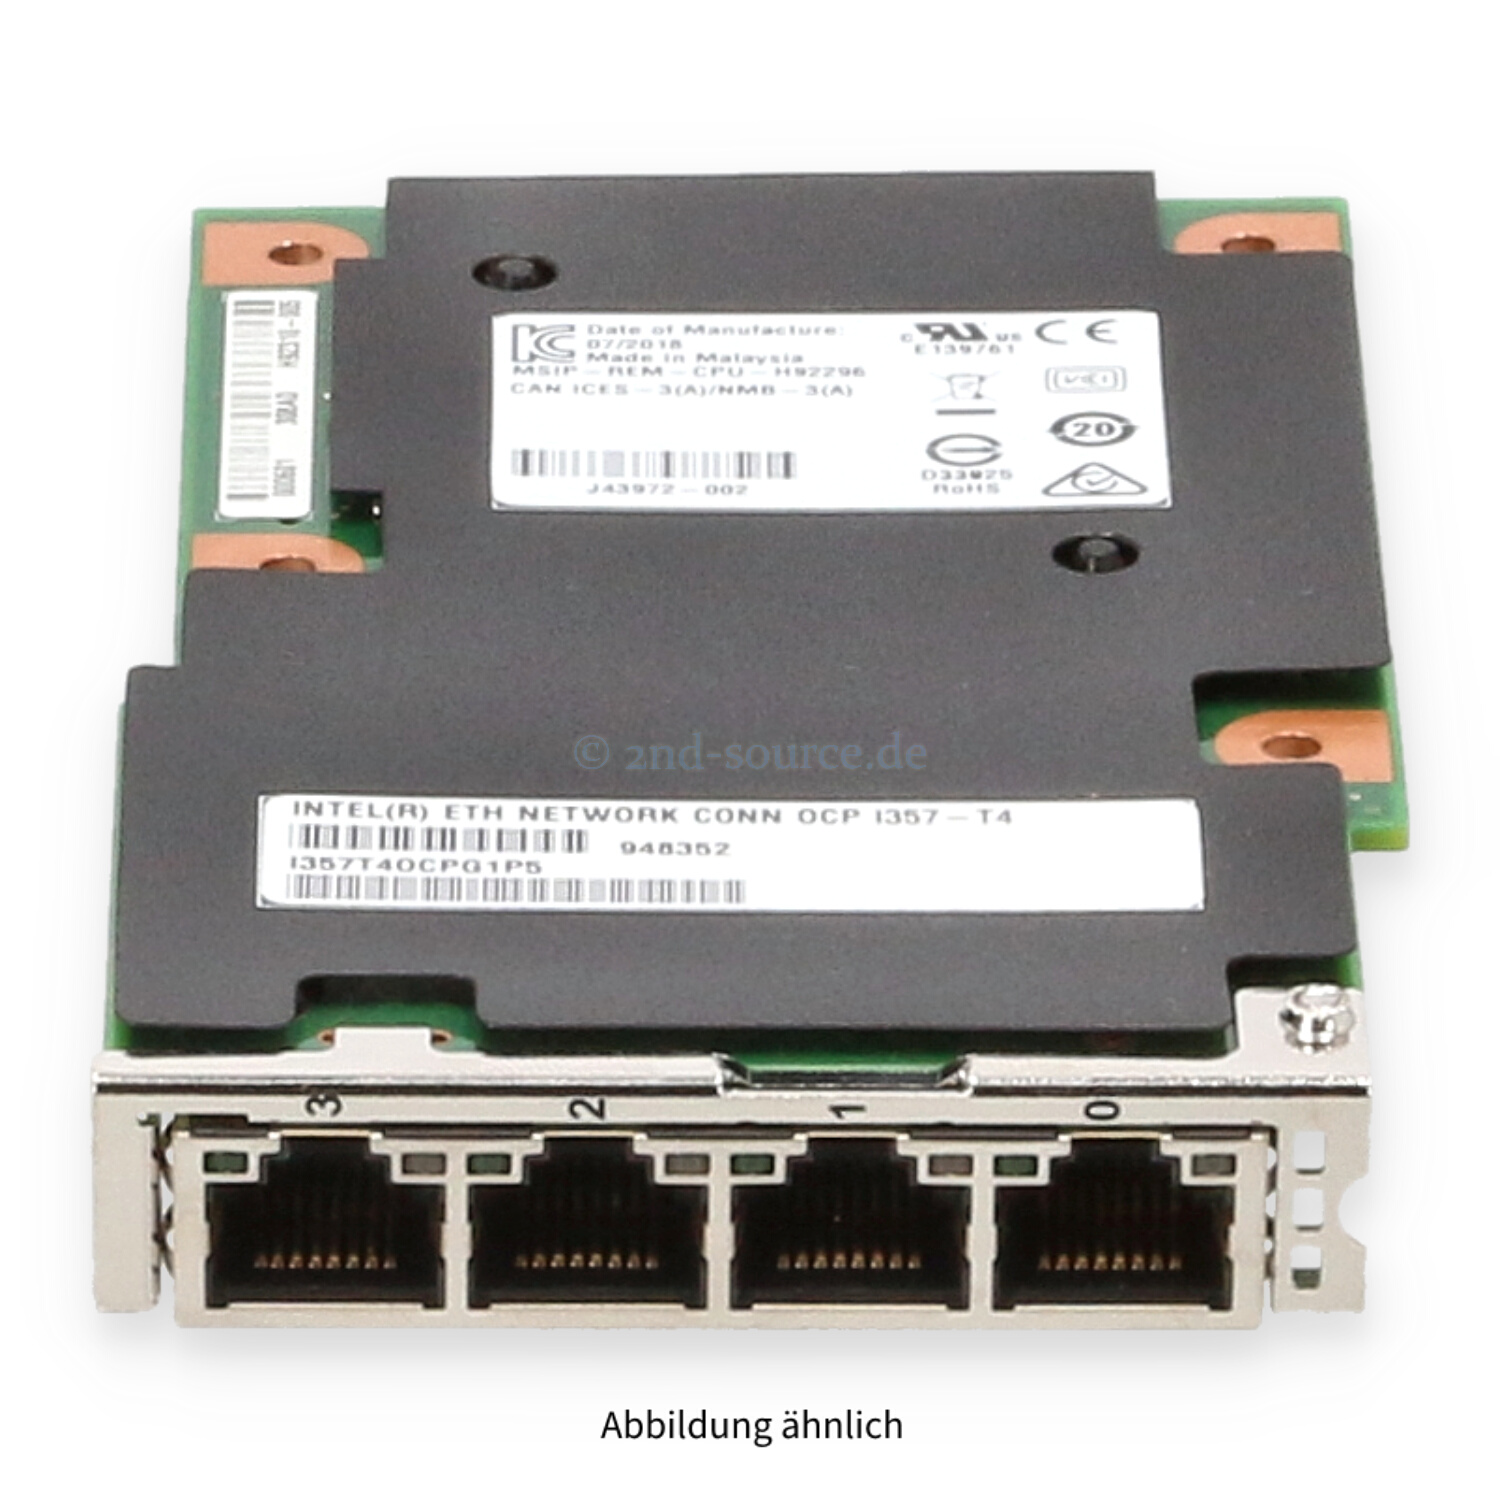 Intel I357-T4 4x 1000Base-T Network Daughter Card I357T4OCPG1P5